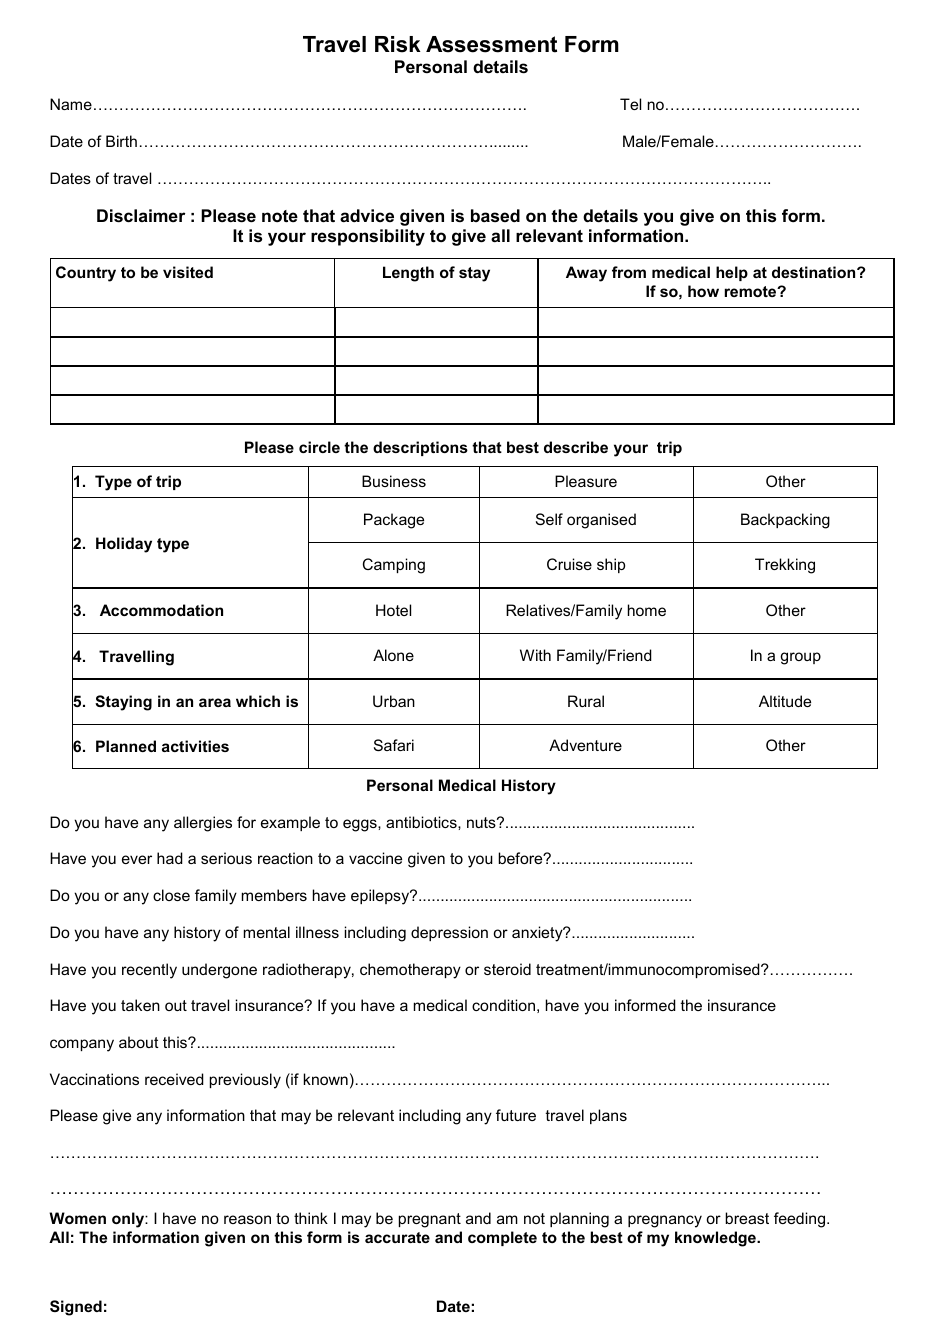 Travel Risk Assessment Form, Page 1